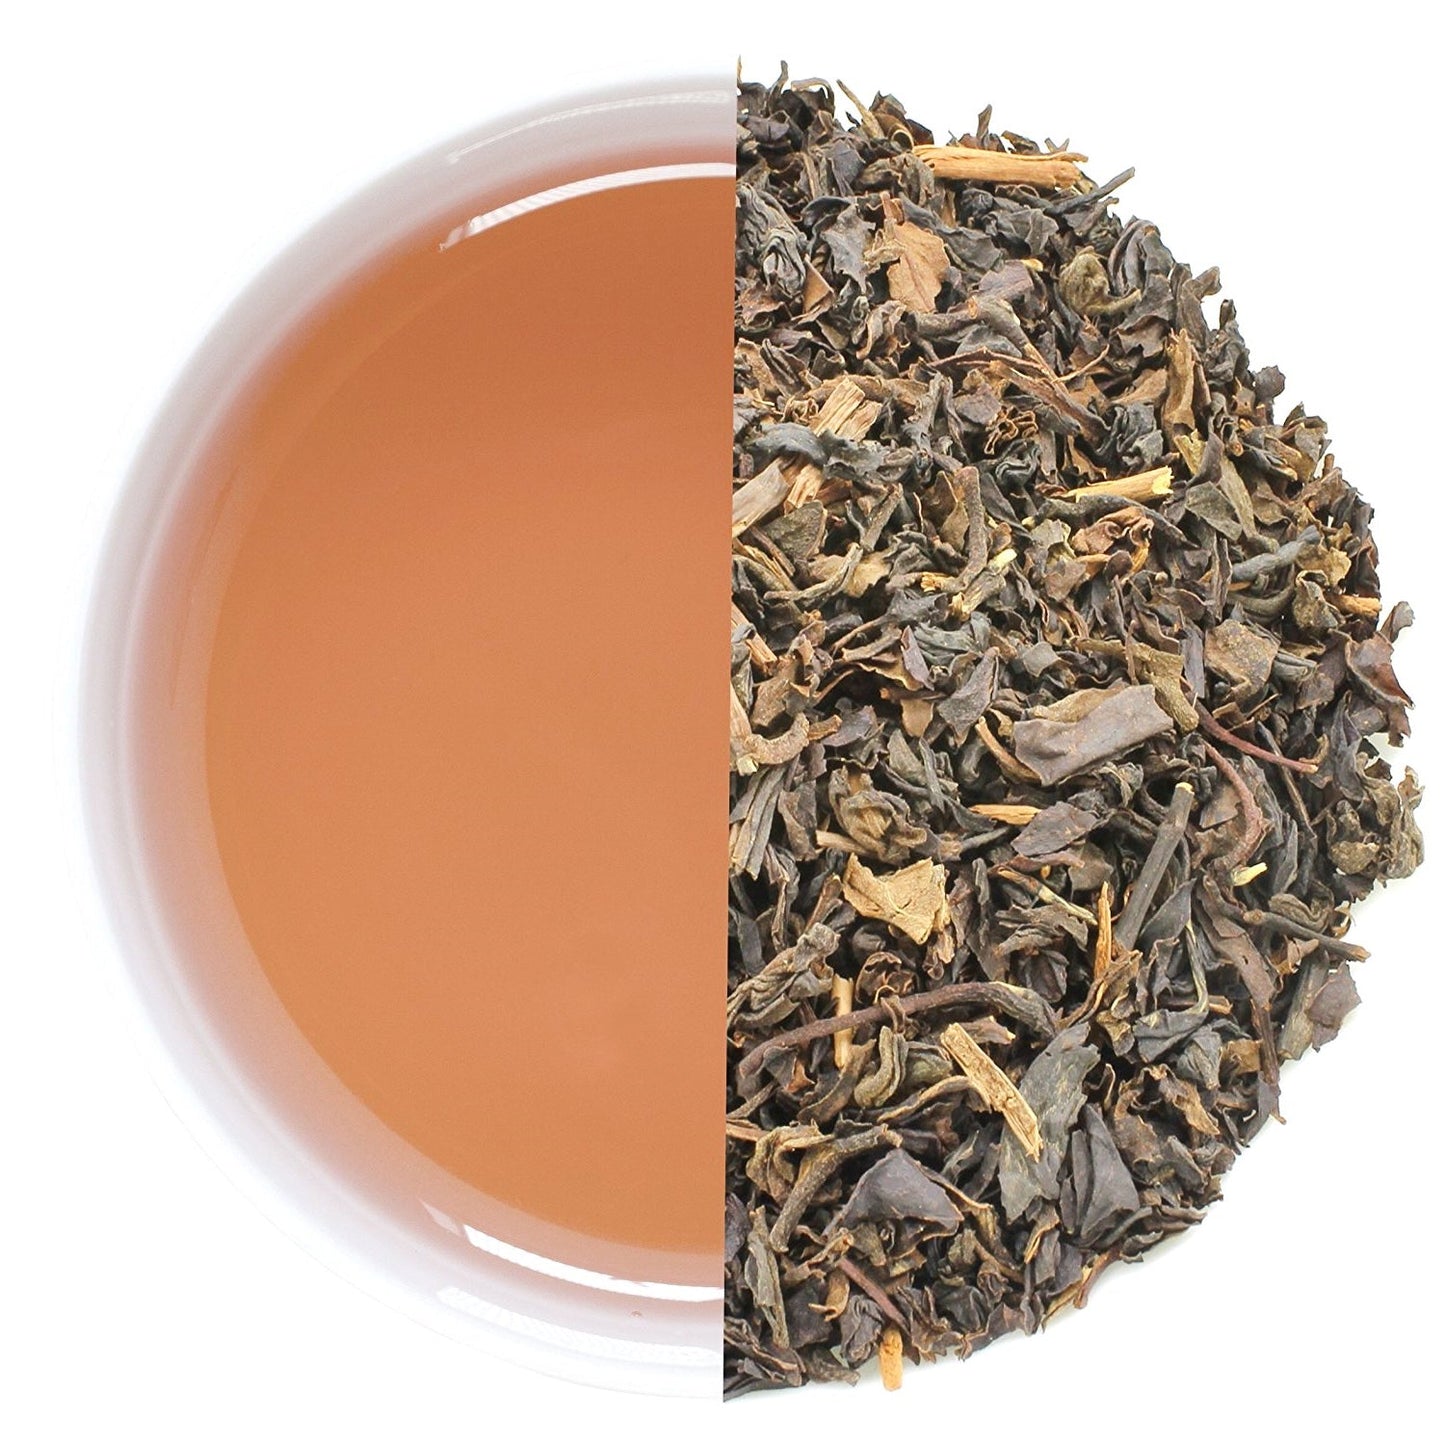 Formosa Standard Oolong Tea